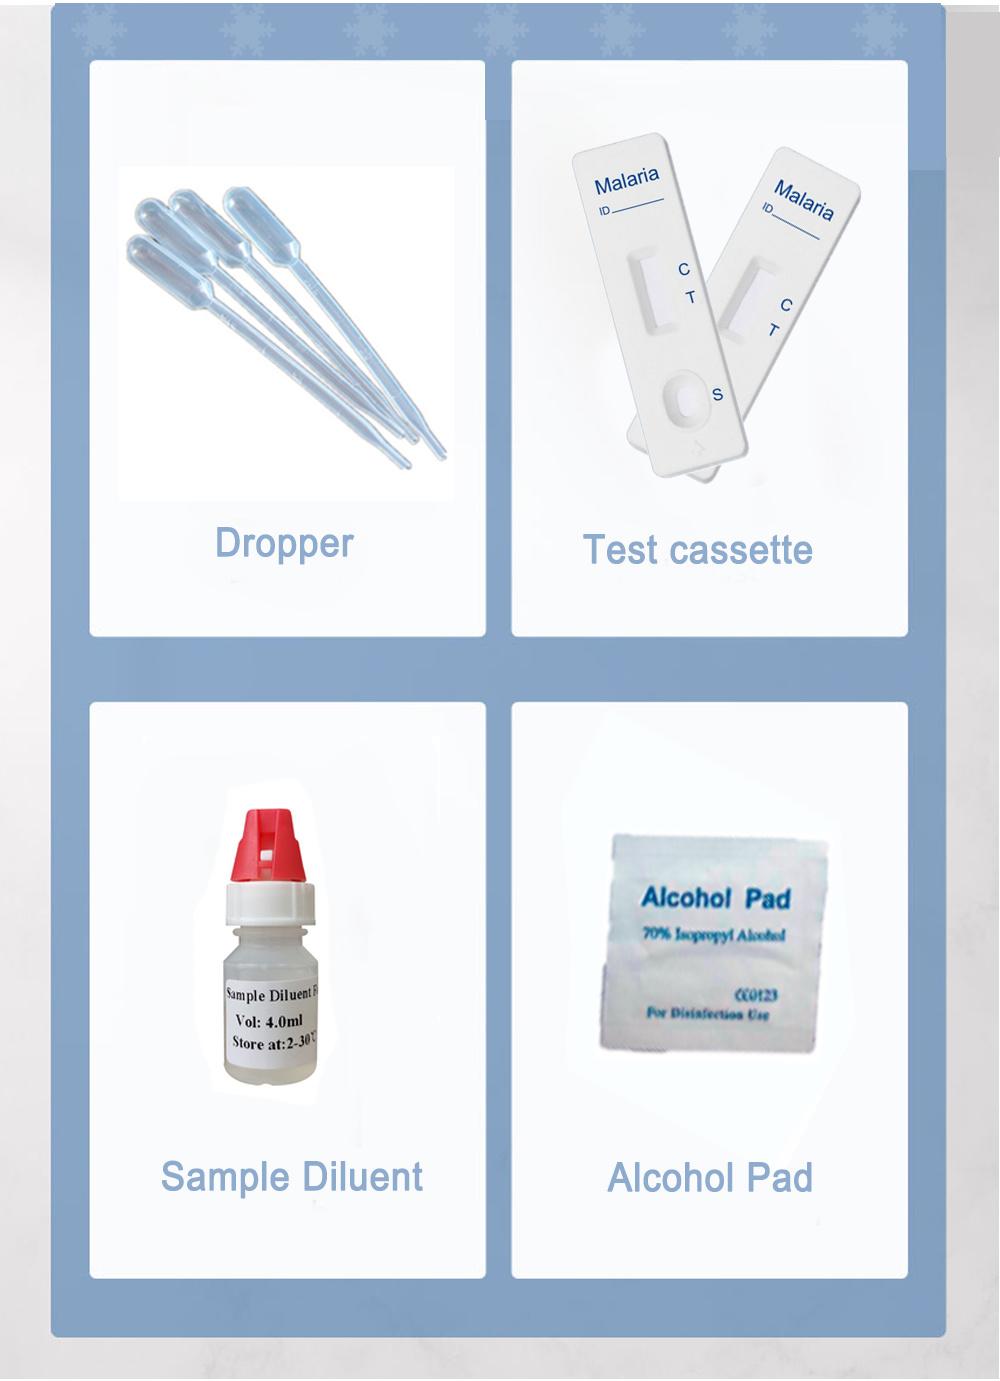 CE Infectious Desease Test--- Tb/Hbsag/HBsAb /HCV/HP/Tb/ Dengue/Malaria Antigen Detection Kit